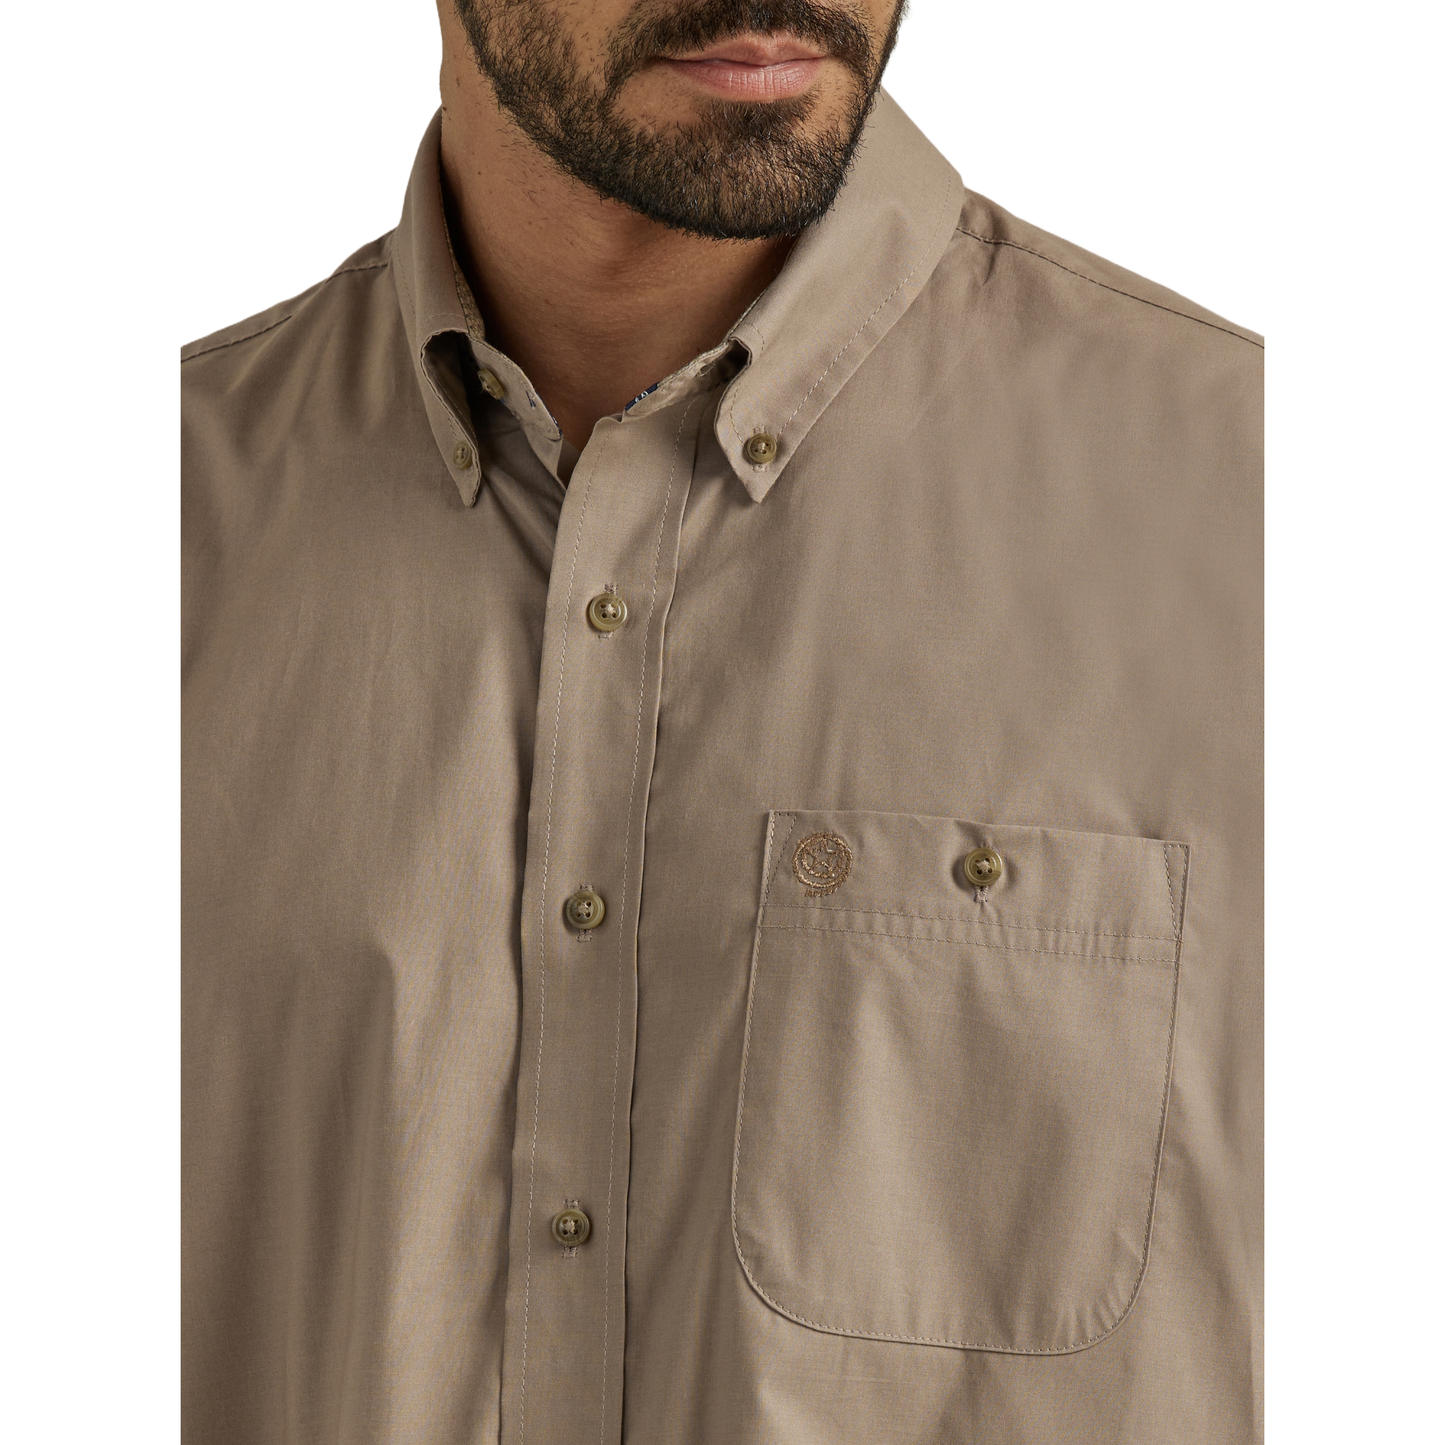 Wrangler Men's George Strait Collection Tan Button Down Shirt 112338097